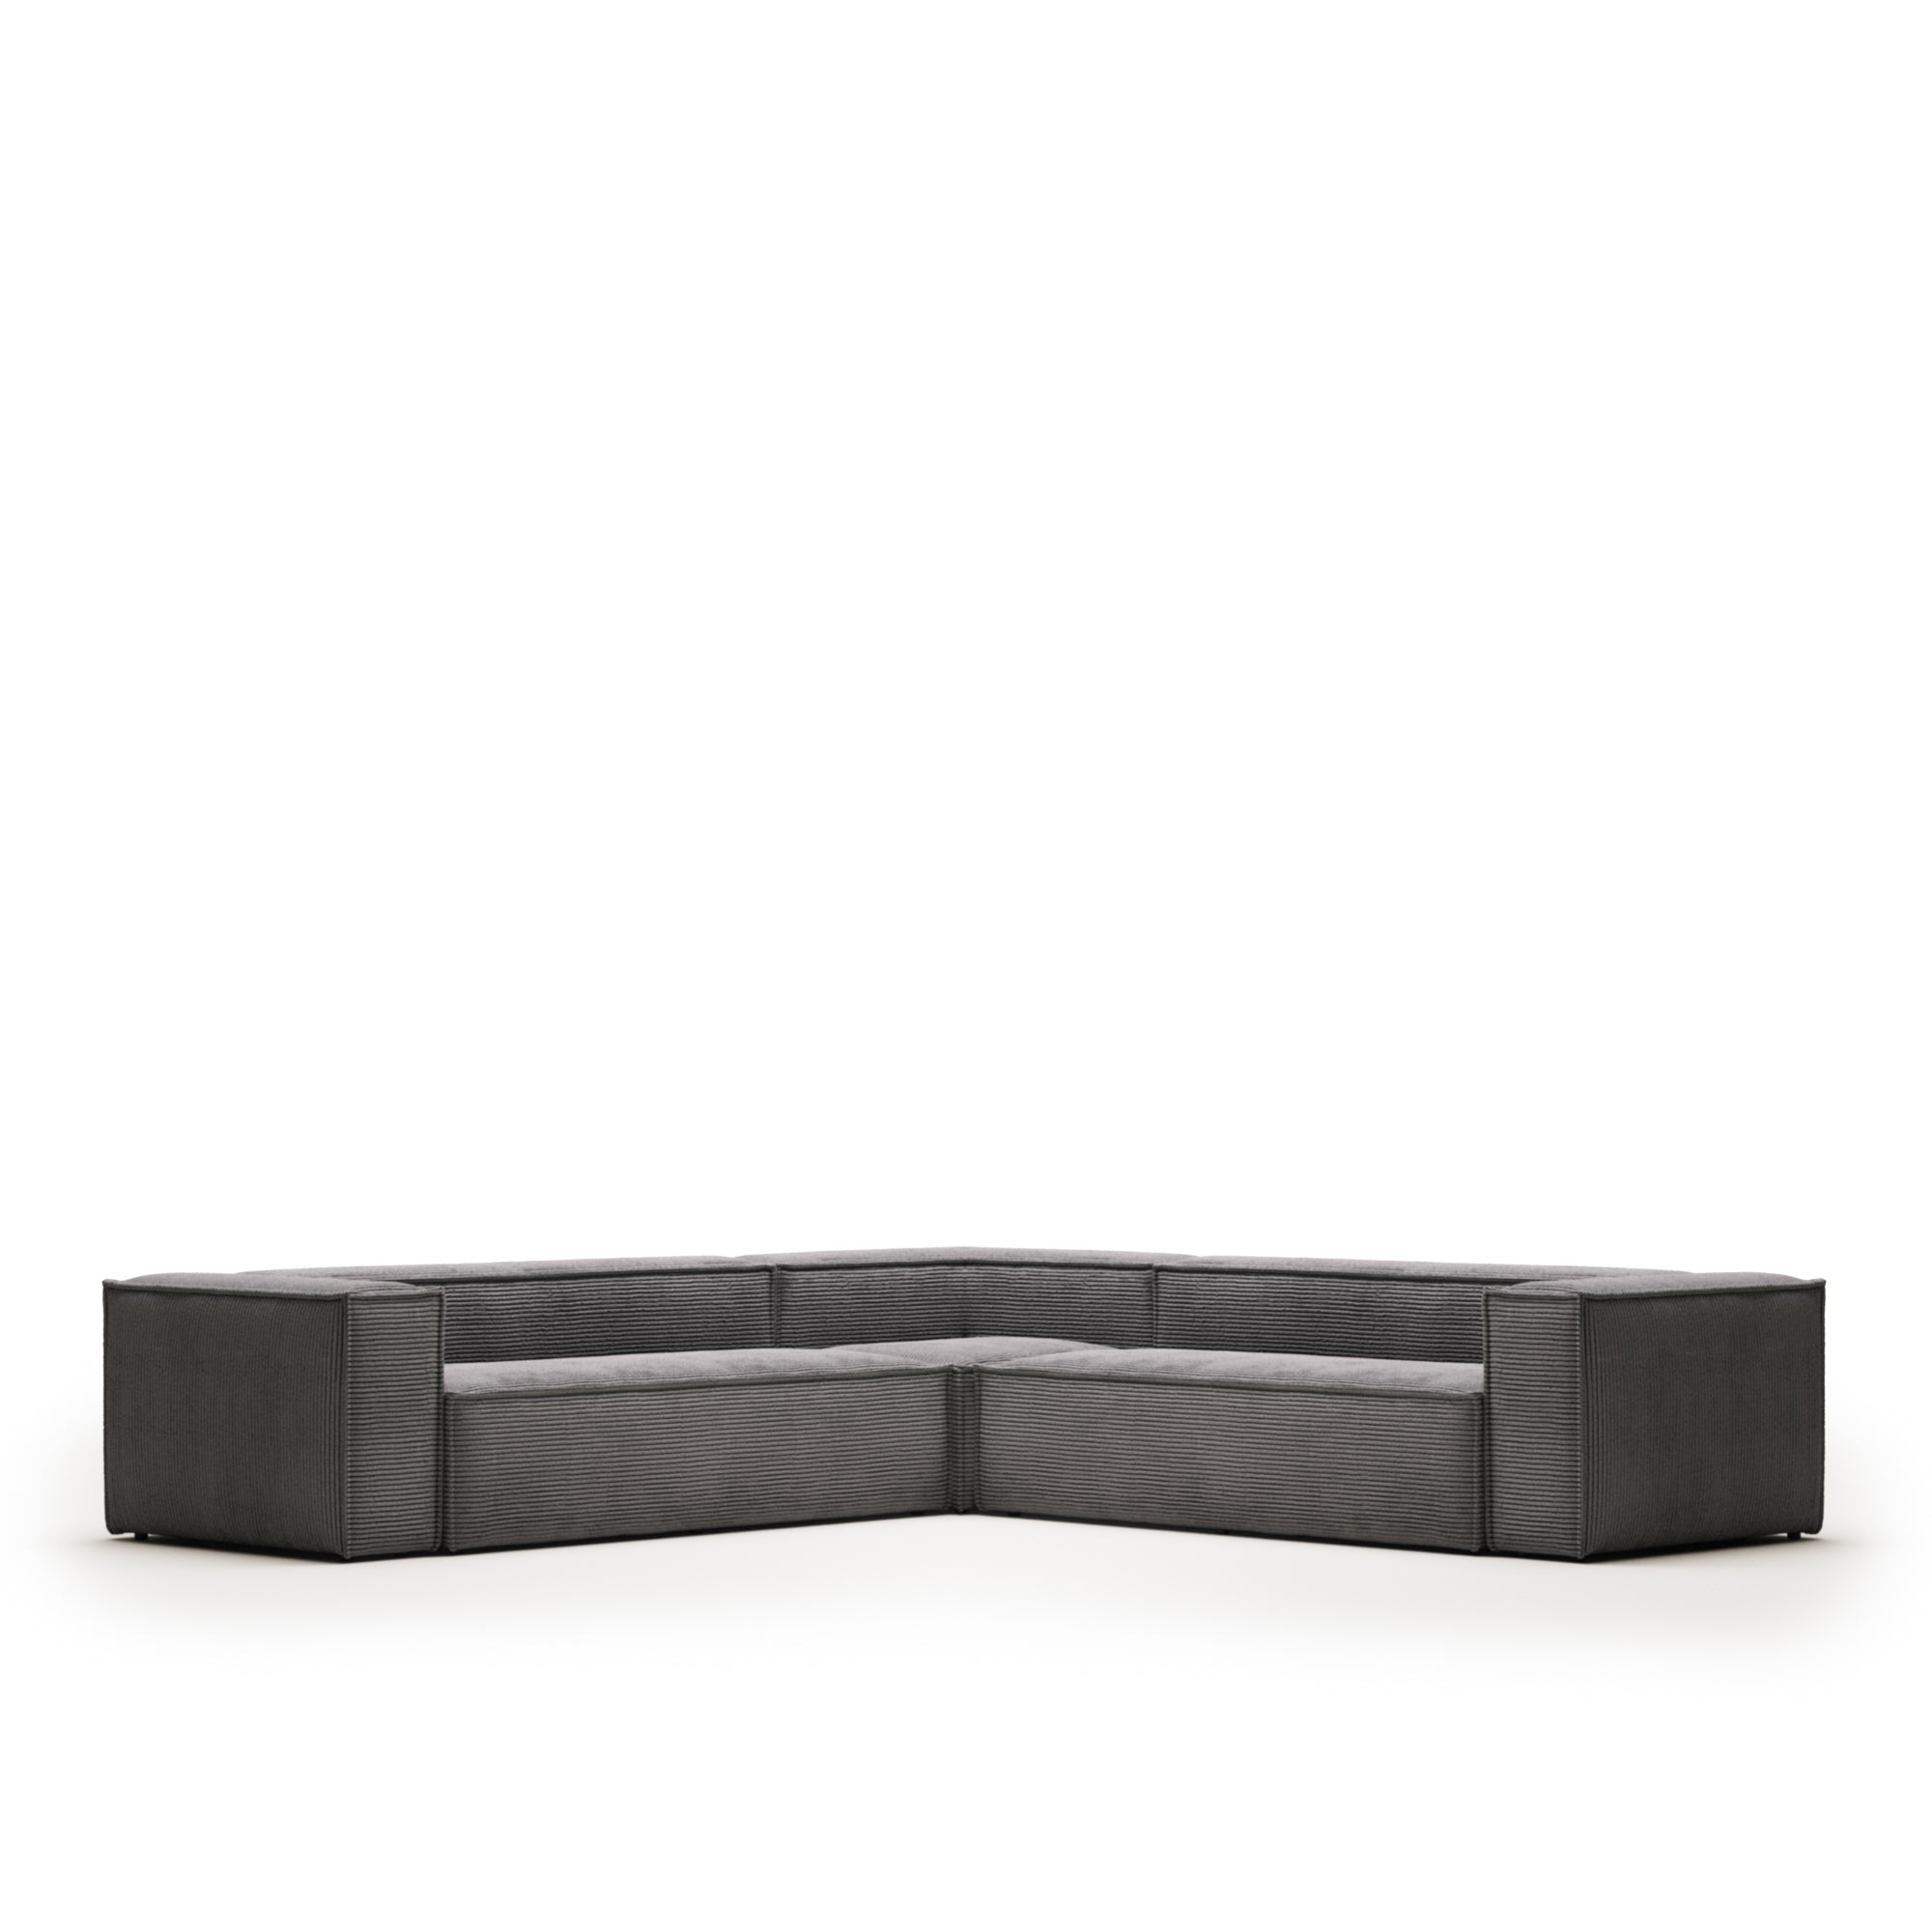 Blok 6 seater corner sofa in grey wide seam corduroy, 320 x 320 cm